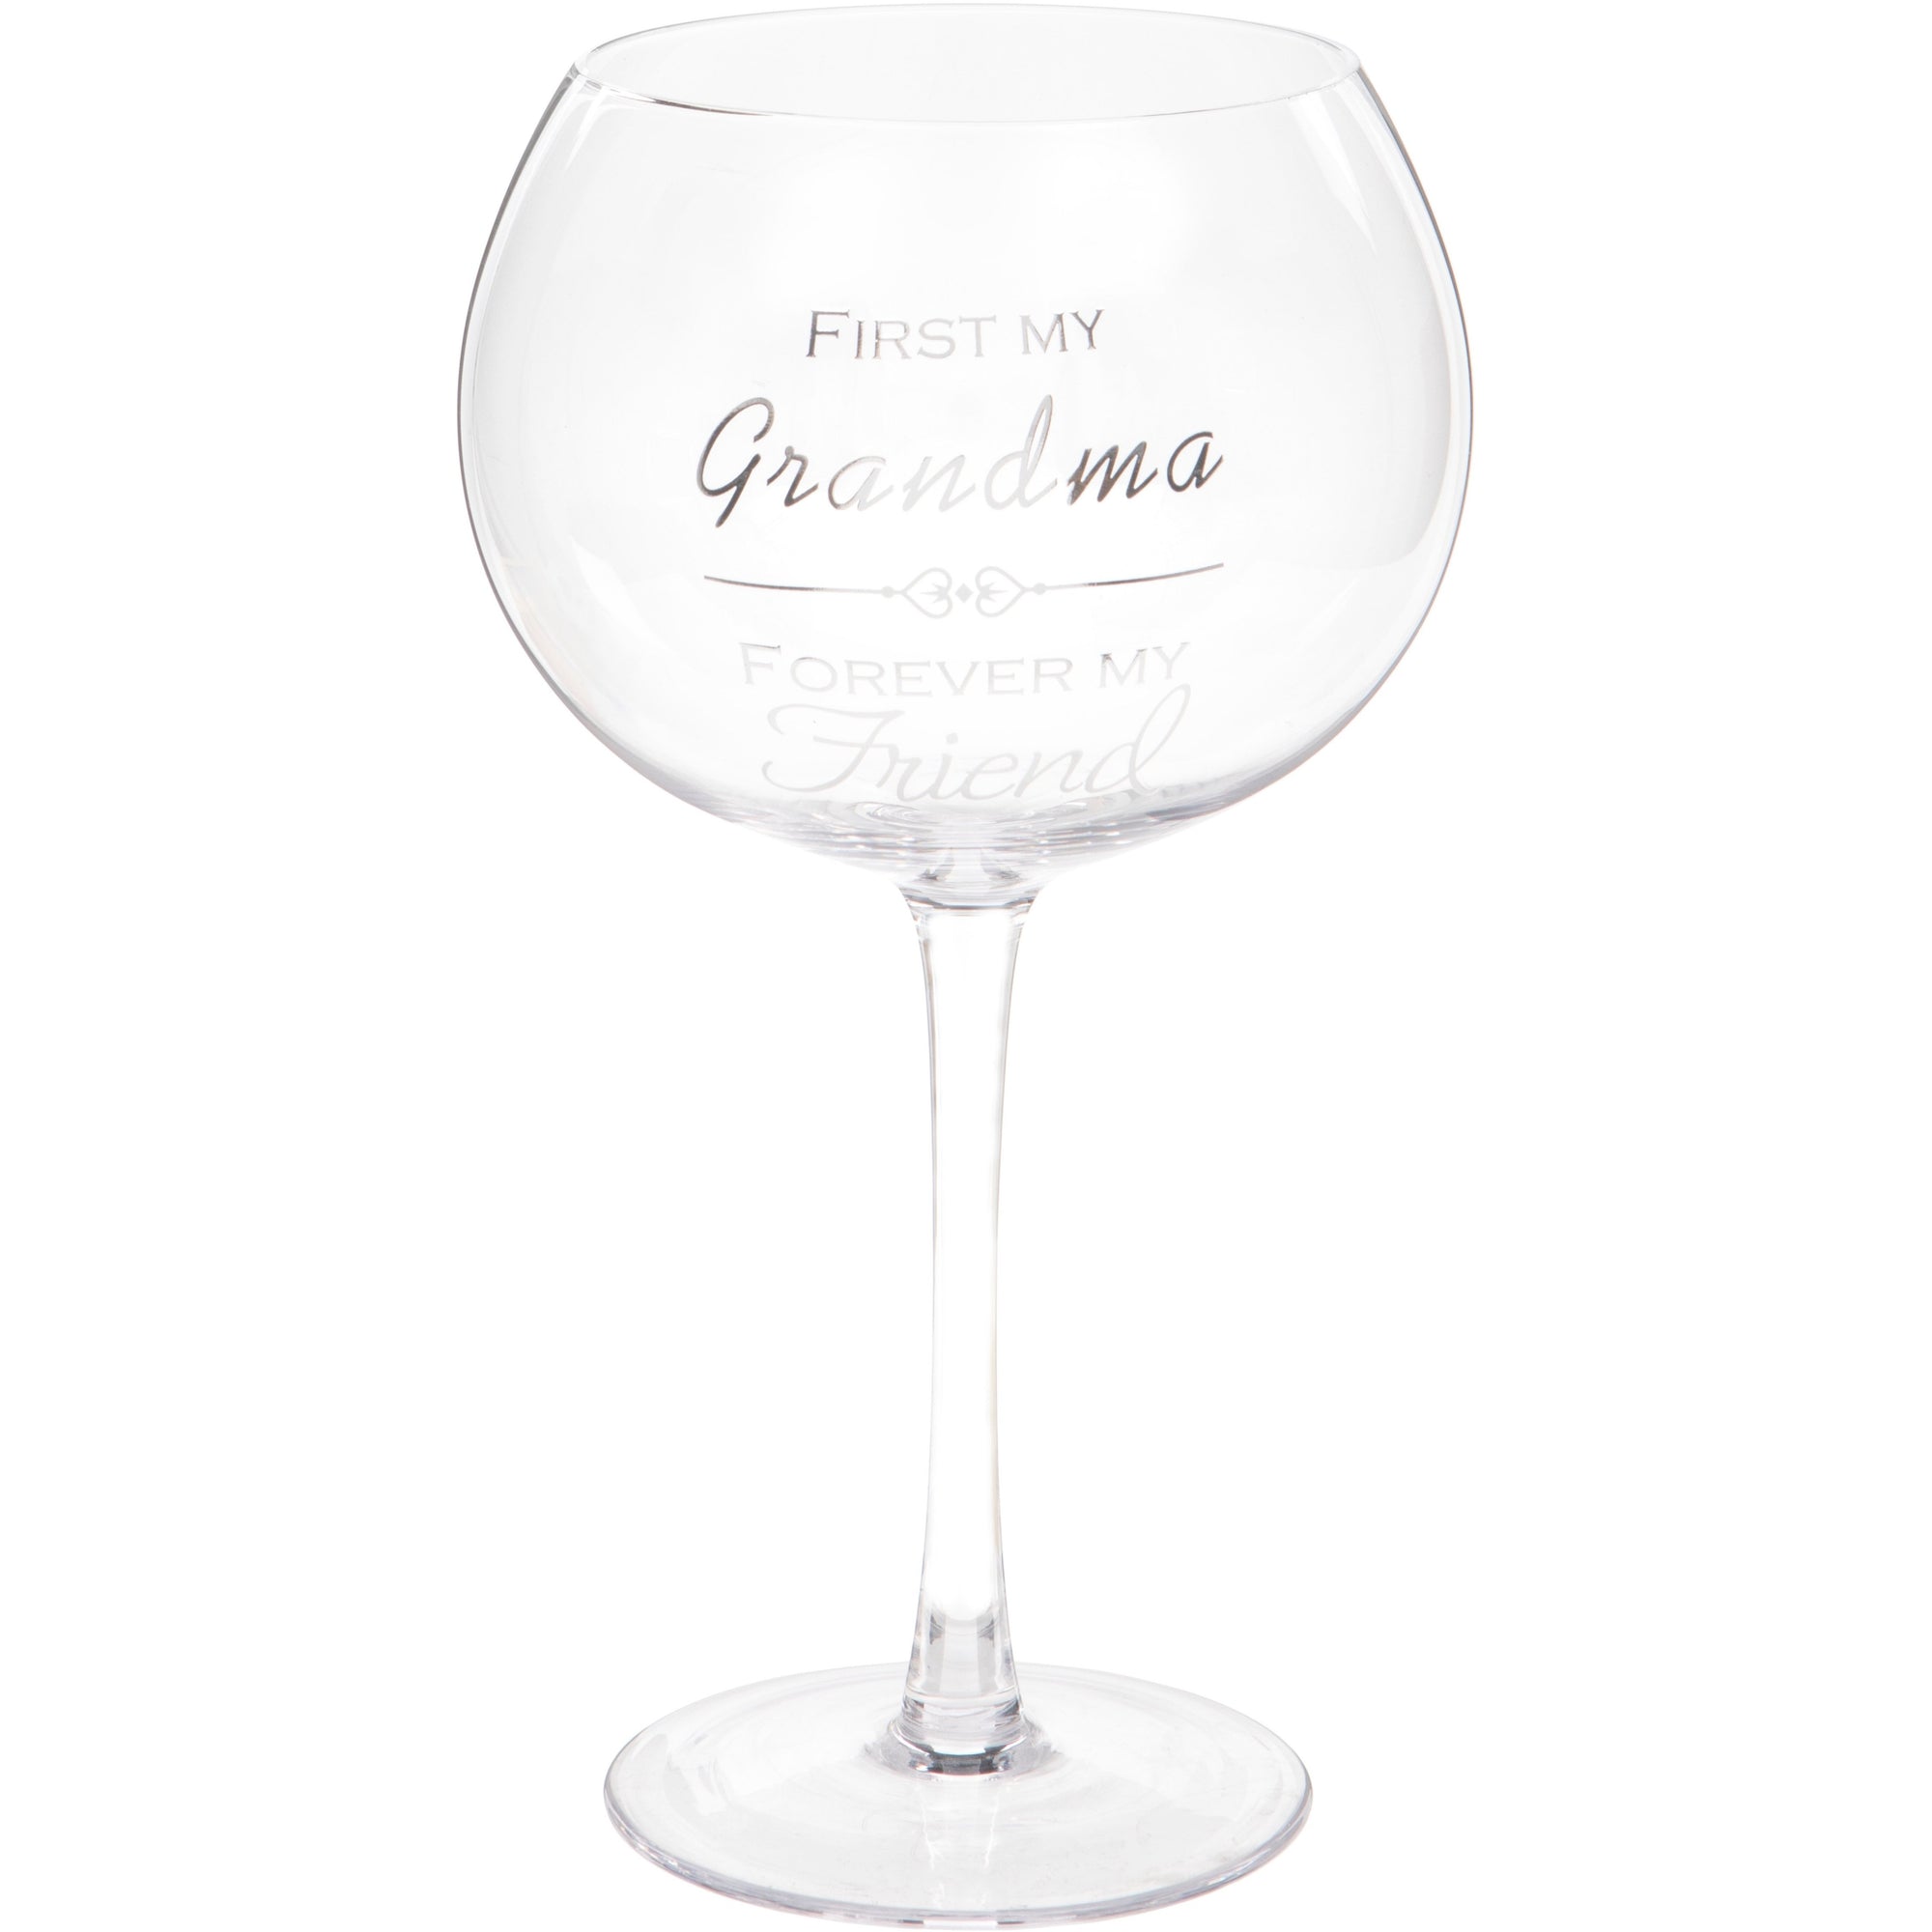 Grandma Gin Glass